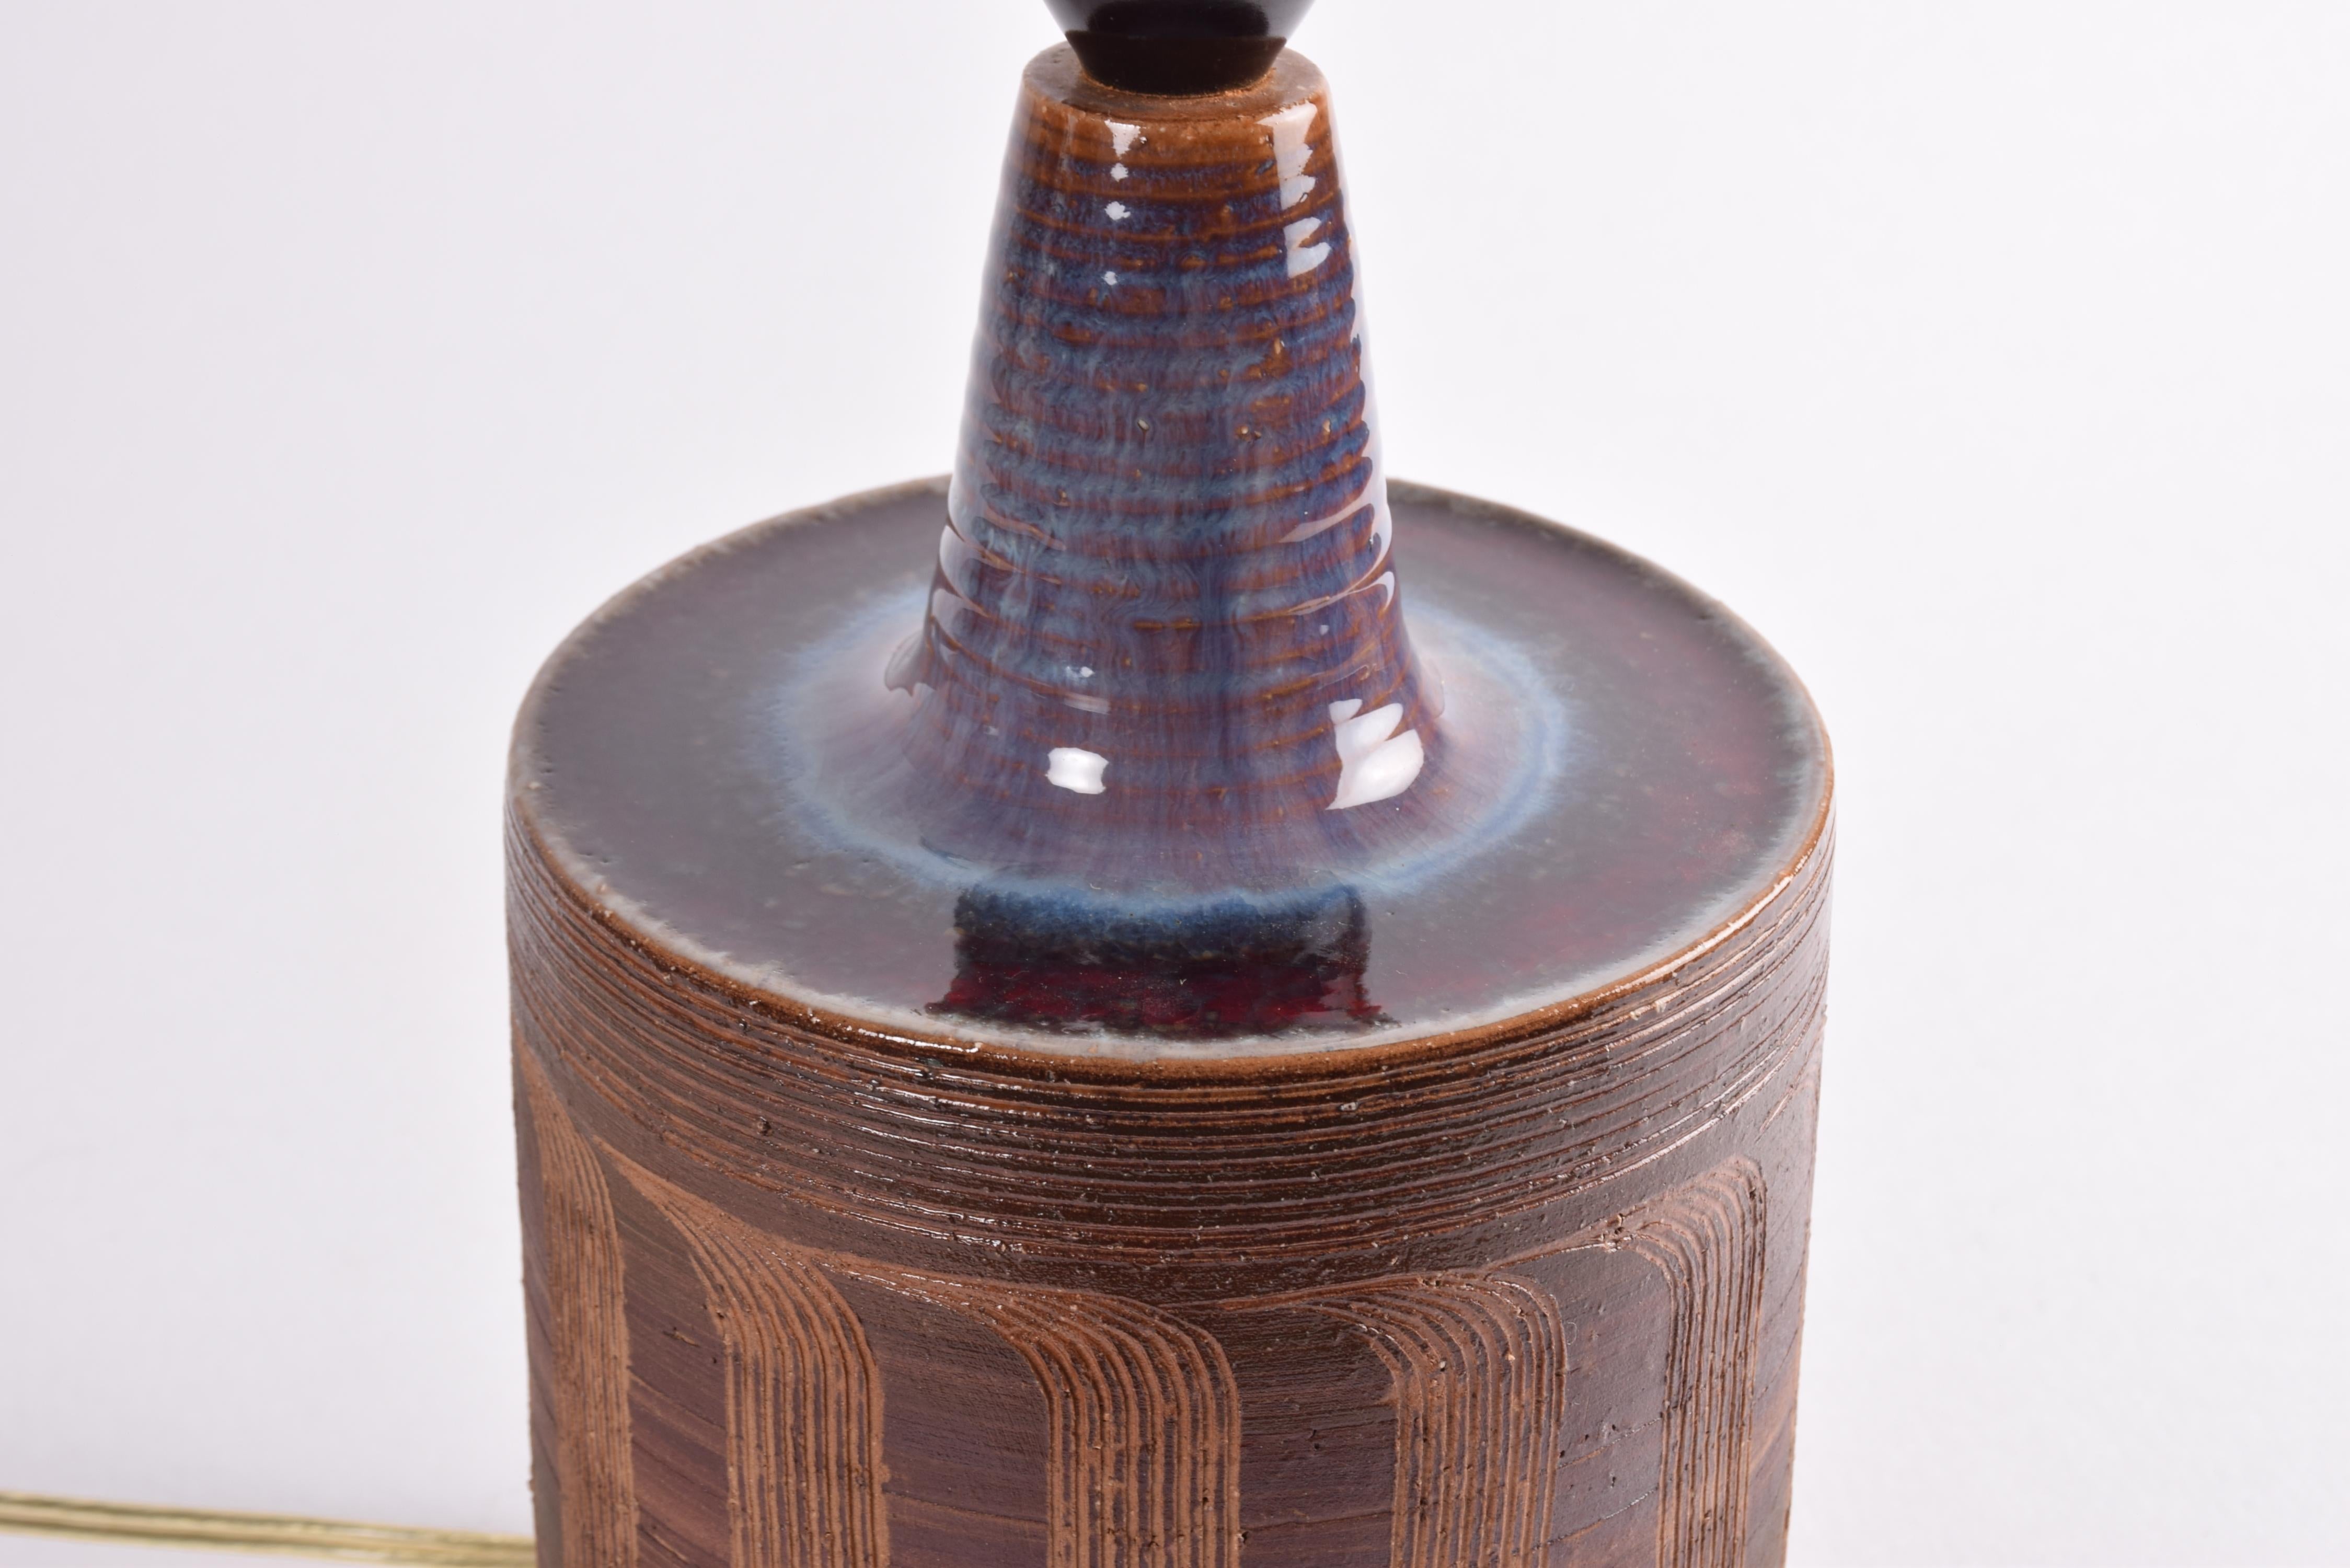 Danish Midcentury Ceramic Table Lamp by Jytte Trebbien, 1960s For Sale 1